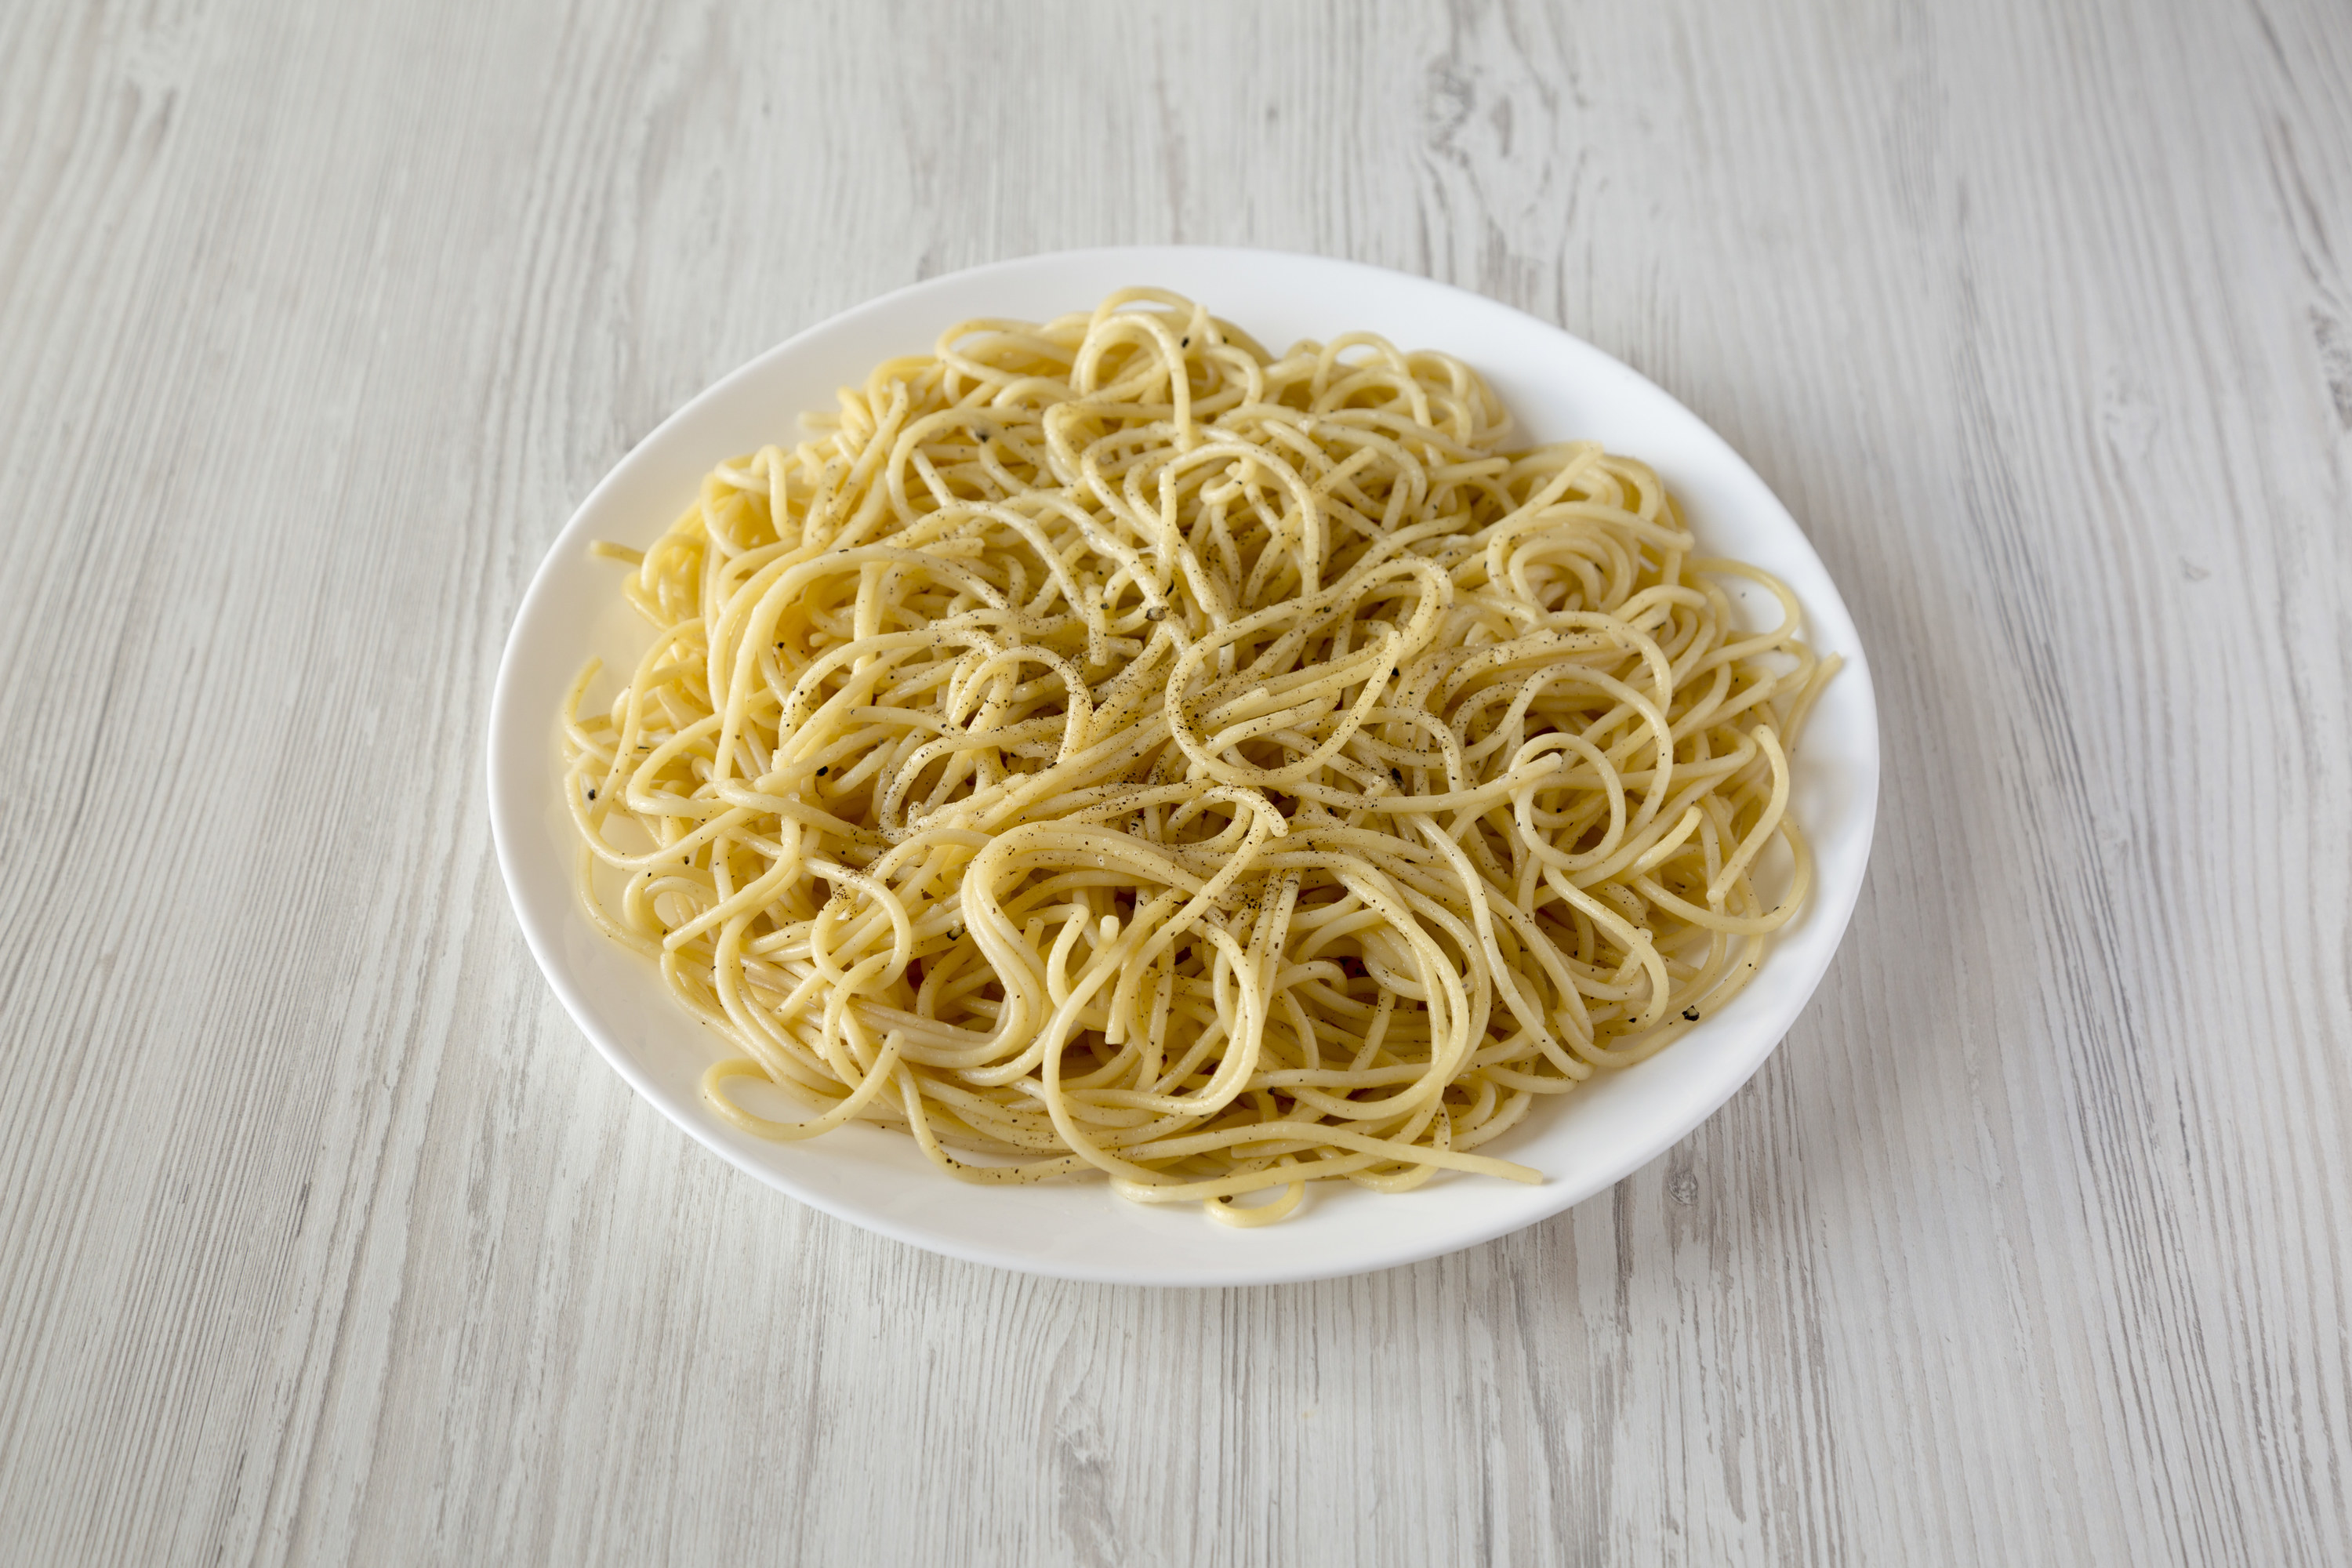 A plate of plain spaghetti